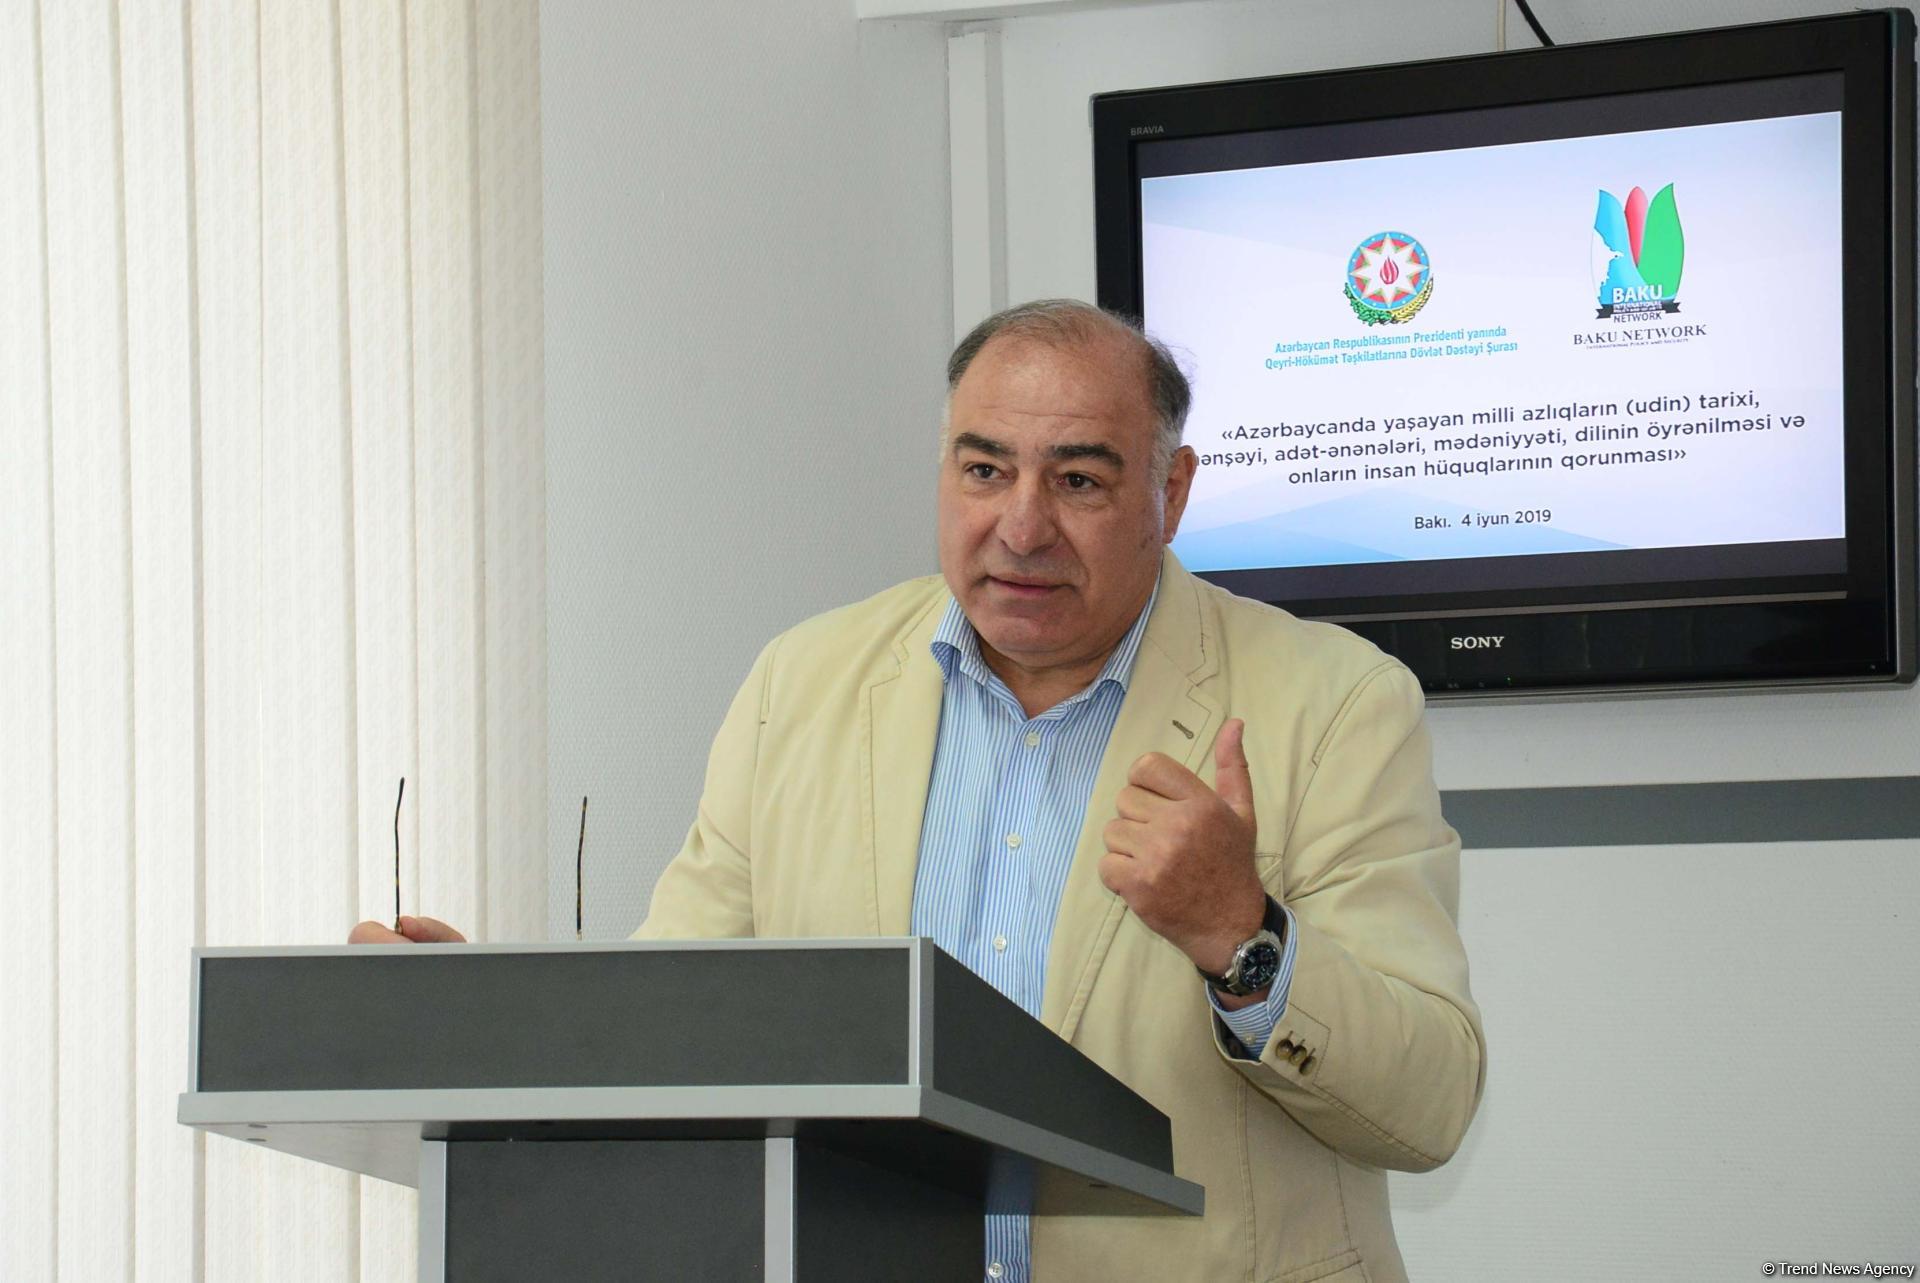 Baku Network experts discuss model of multiculturalism (PHOTO)